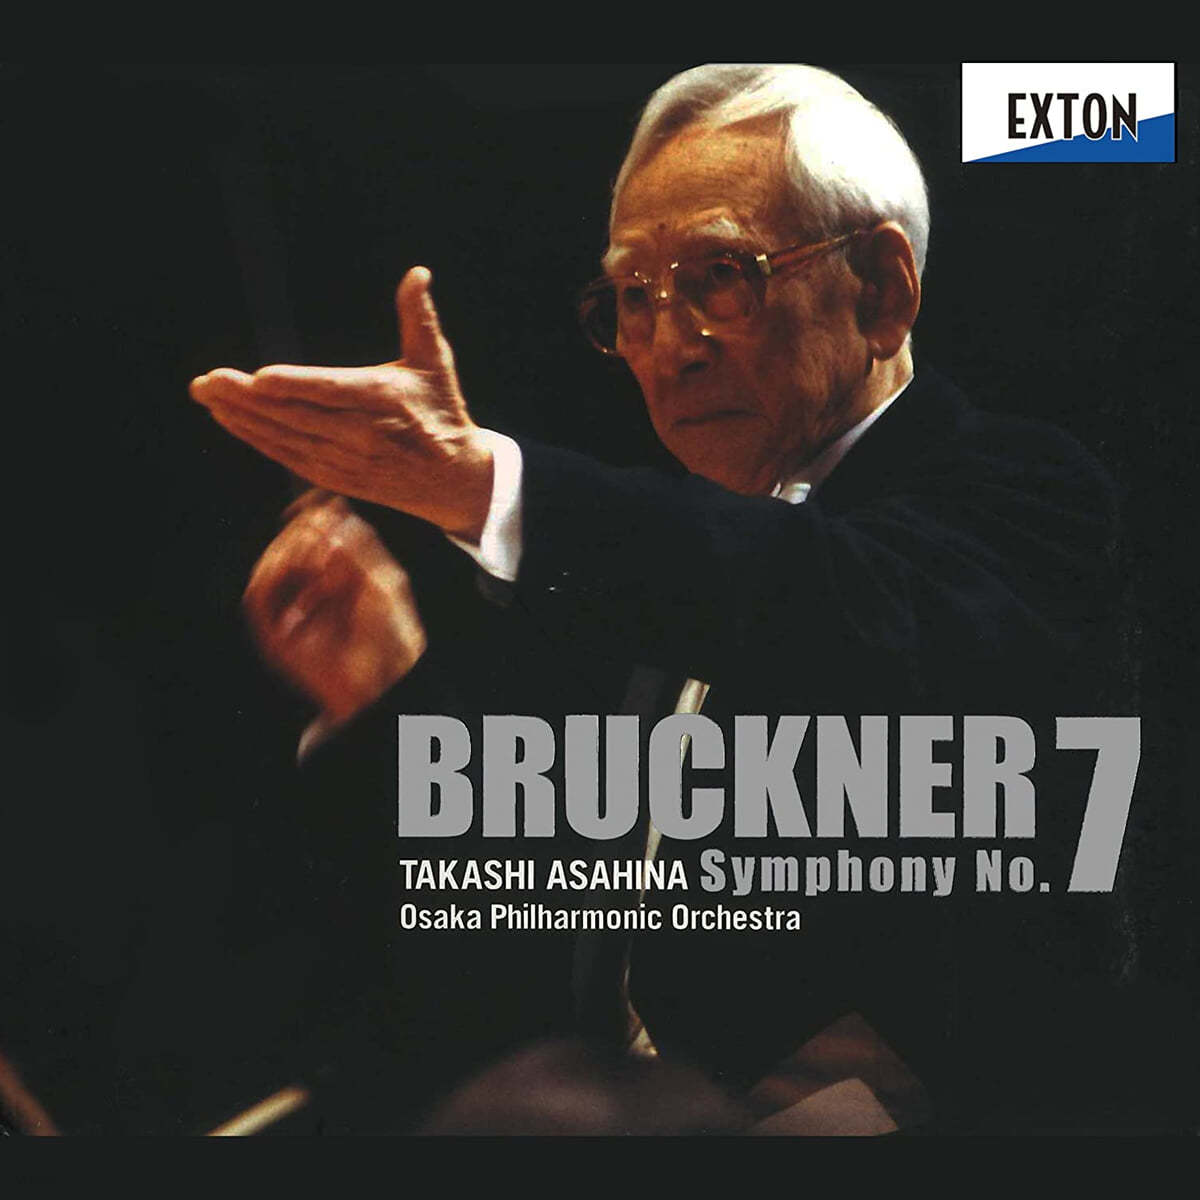 Takashi Asahina 브루크너: 교향곡 7번 (하스판) - 아사히나 (Bruckner: Symphony No.7 - ed. Haas) 